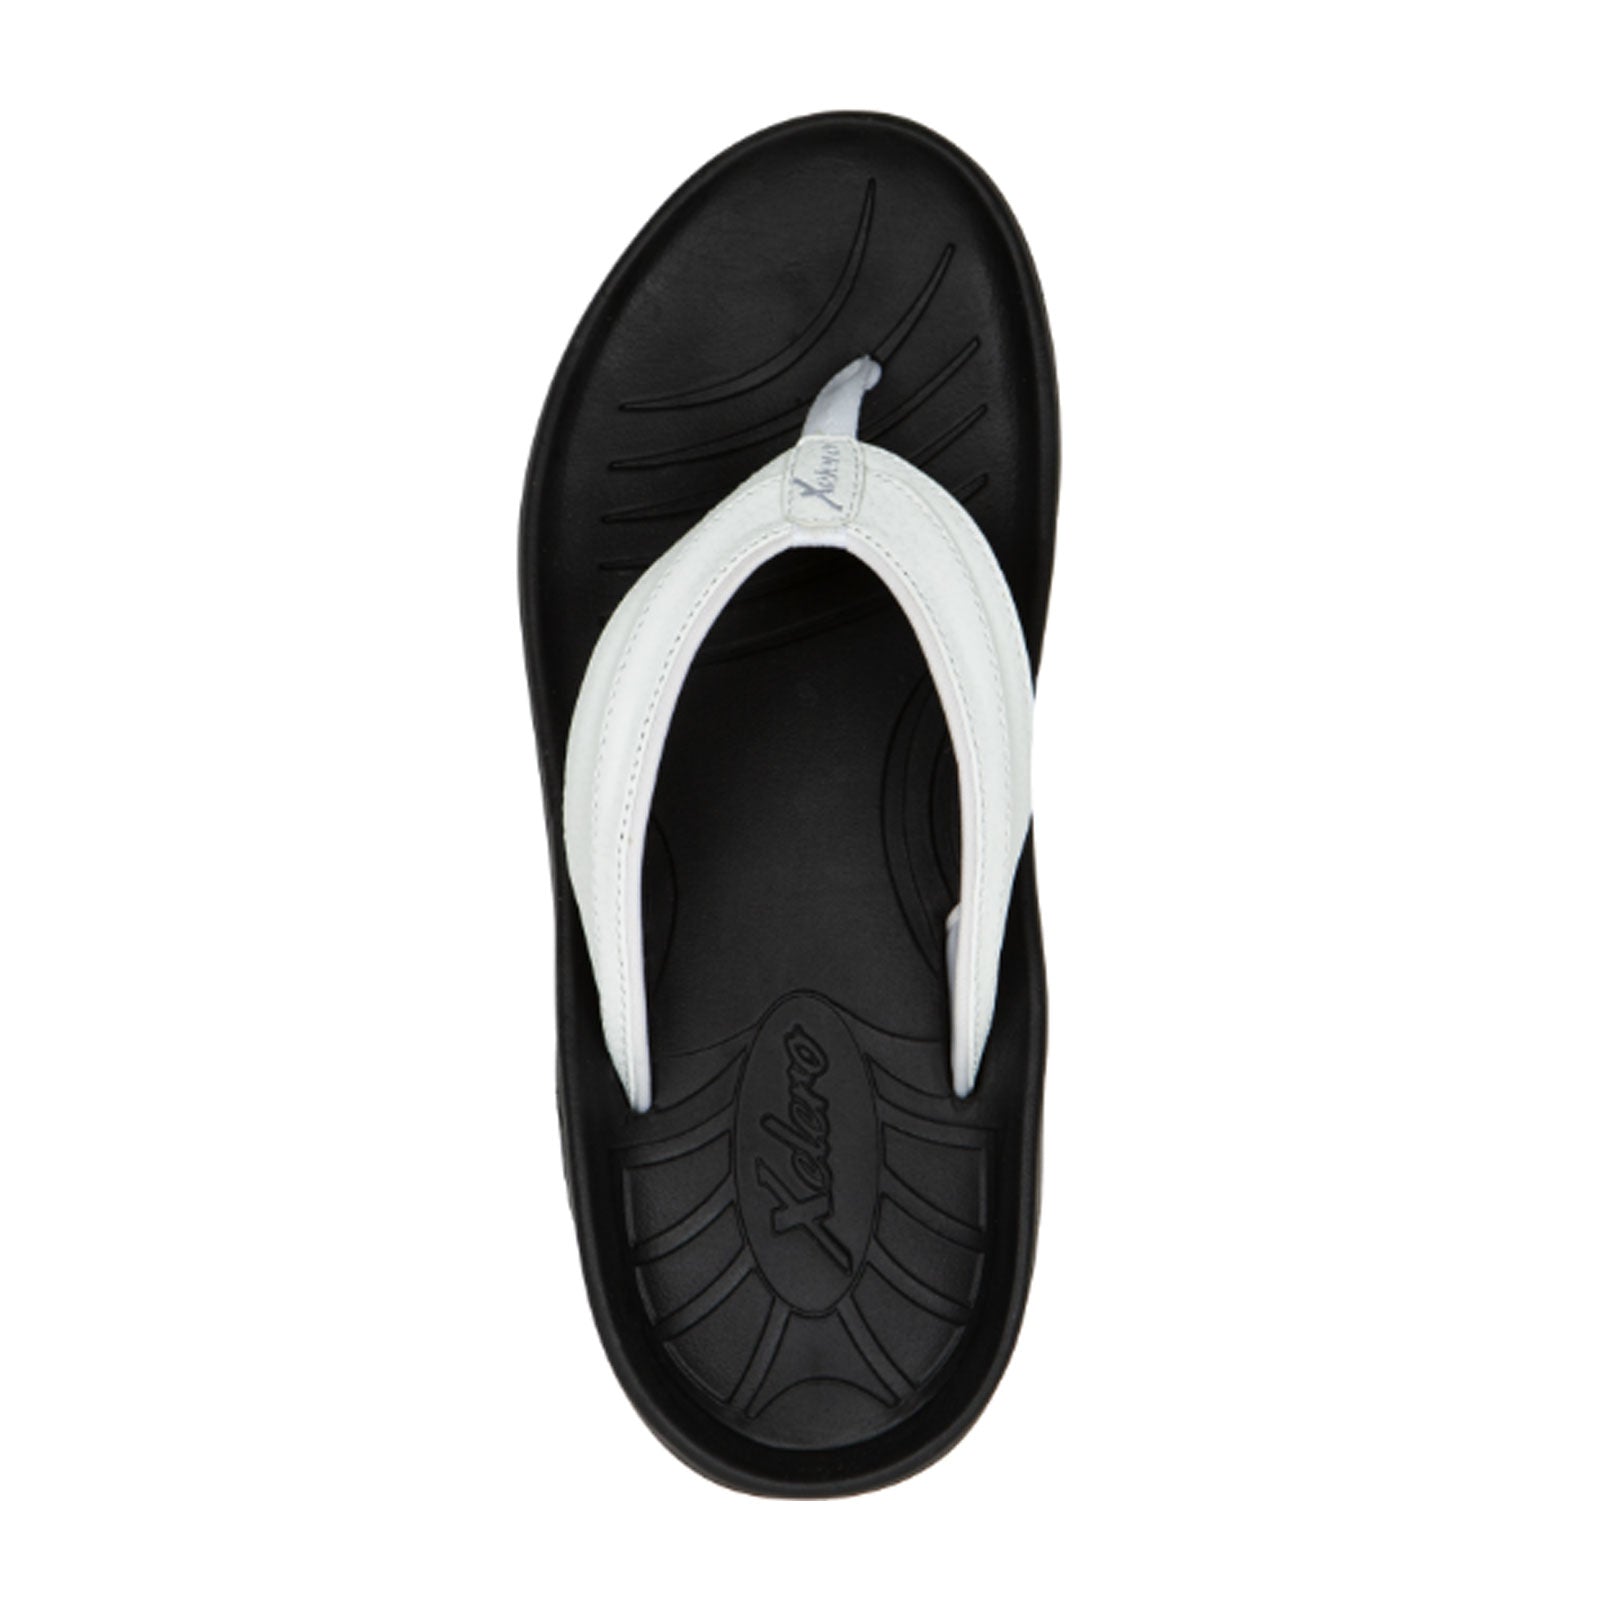 Xelero Tru Thong Sandal (Women) - Snow/Onyx - The Heel Shoe Fitters